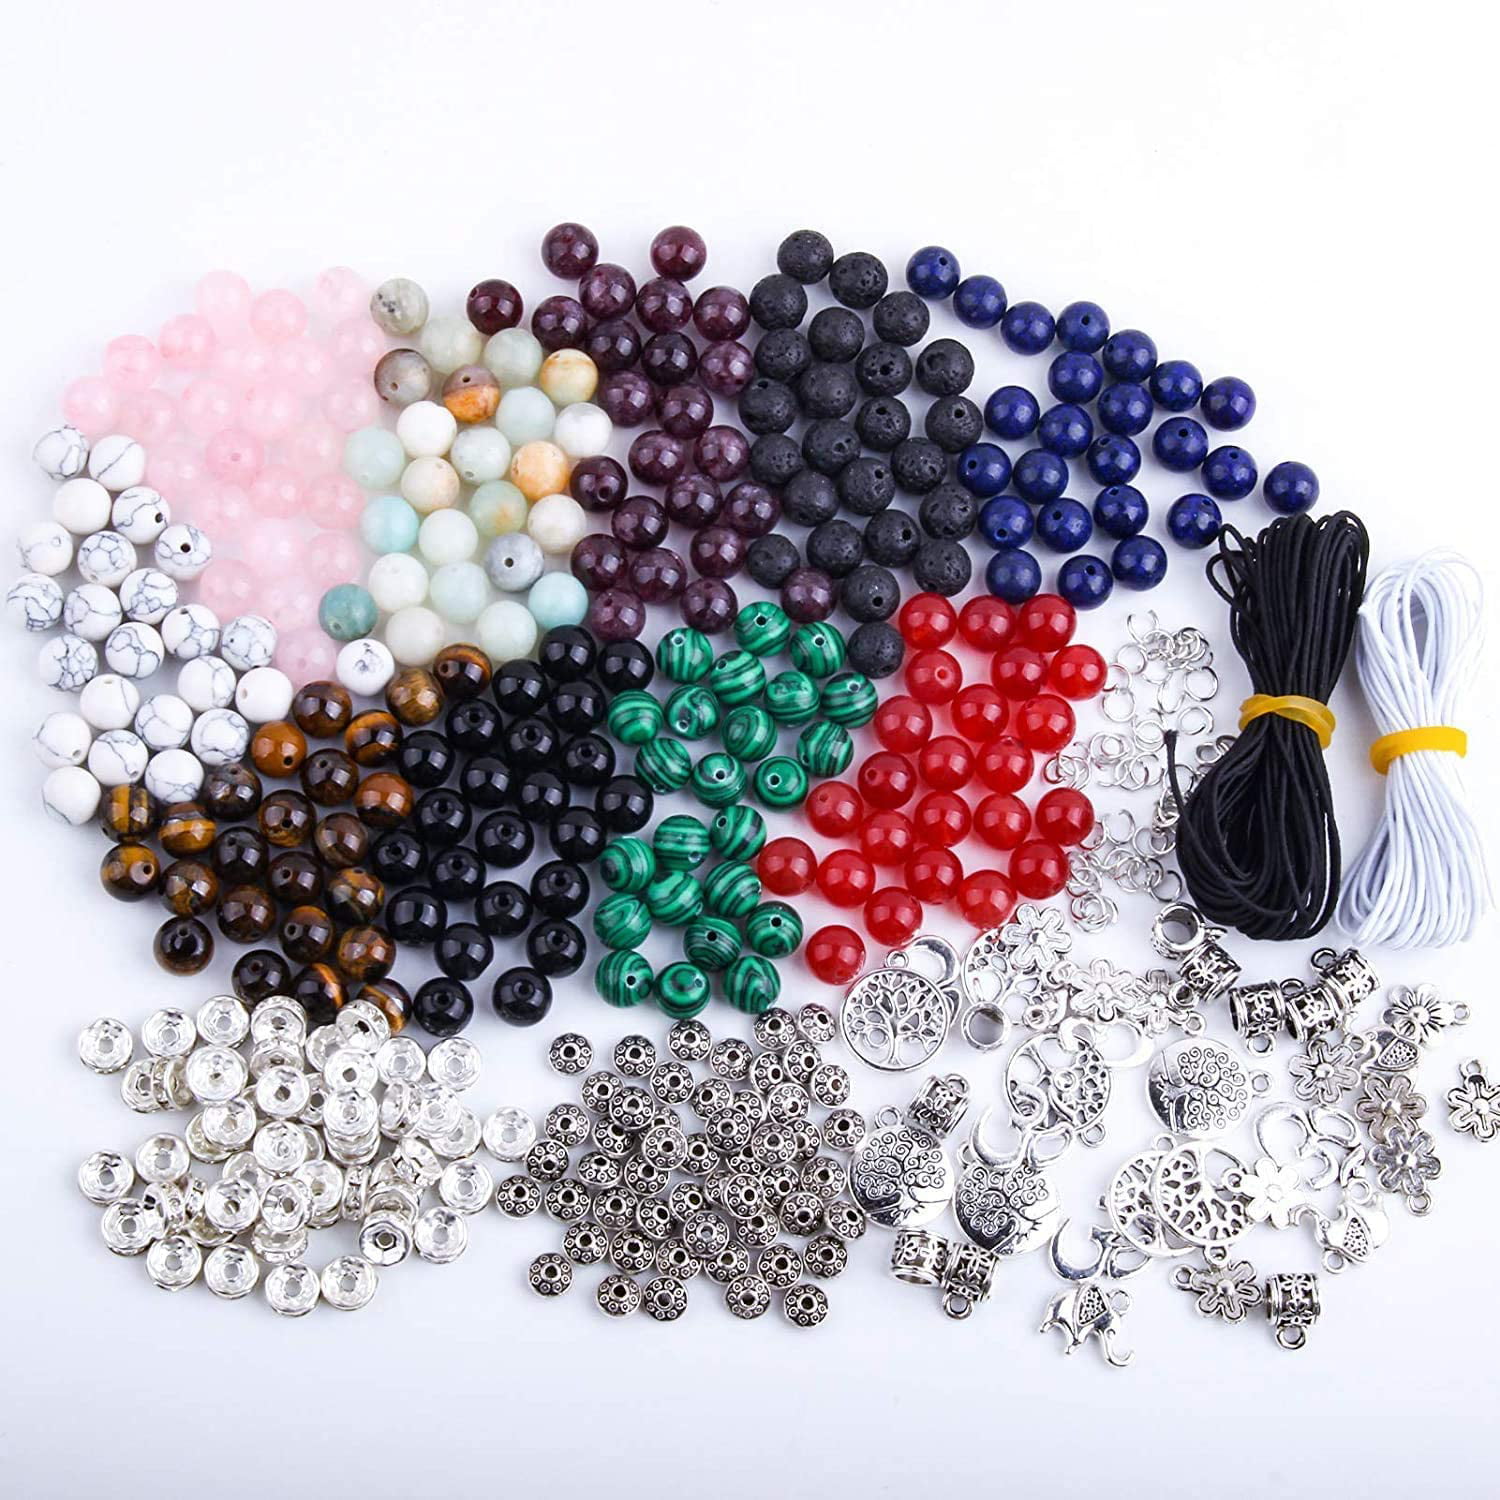 Mchruie 691pc Bracelet Making Kit, 8mm Beads for Bracelets Making - Natural  Stone Gemstone Beads for Jewelry Making DIY Bracelet Kit for Adults